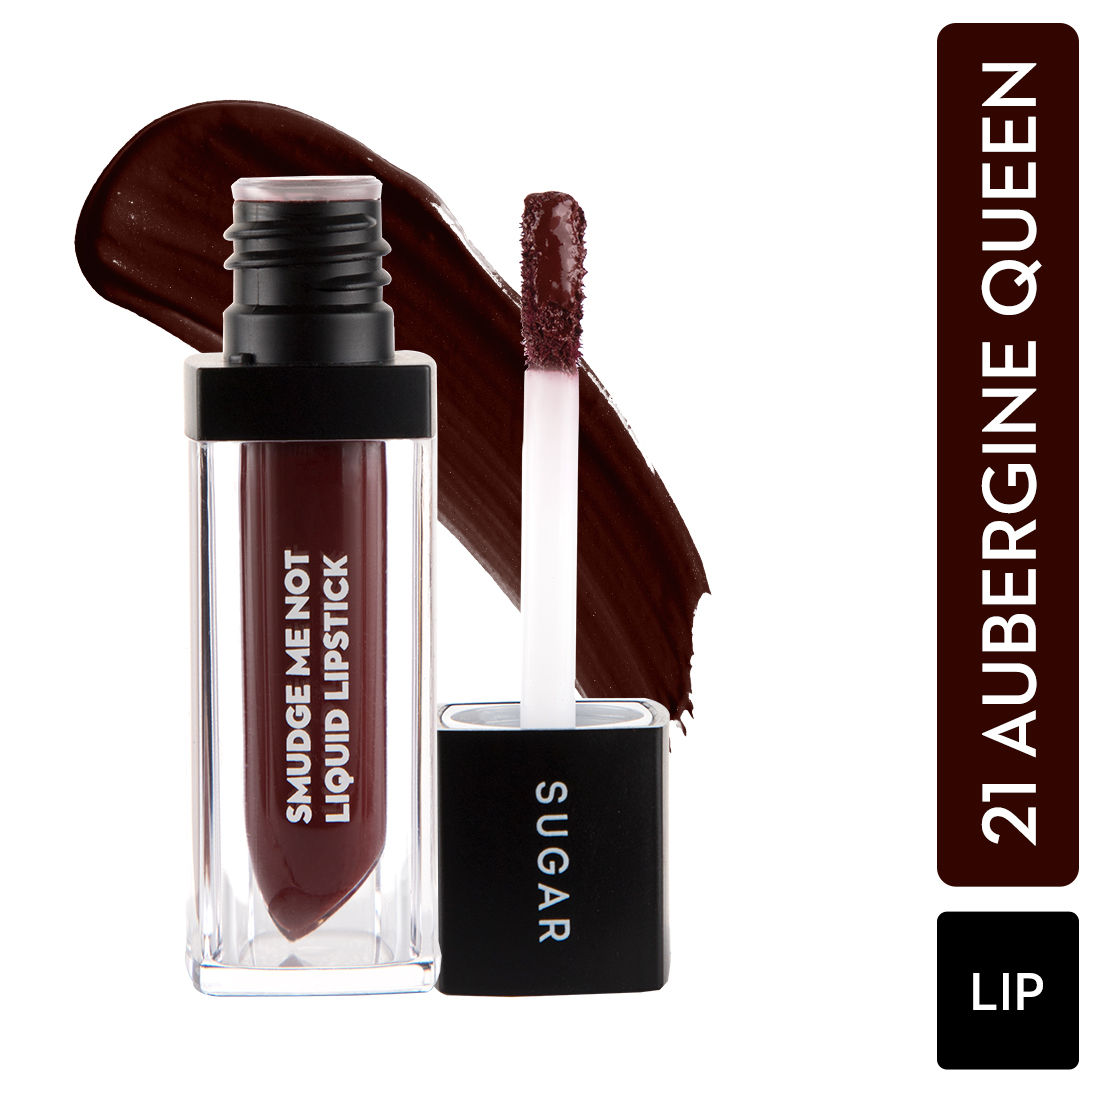 Buy SUGAR Cosmetics - Smudge Me Not - Liquid Lipstick - 21 Aubergine Queen (Blackened Burgundy) - 4.5 ml - Ultra Matte Liquid Lipstick, Transferproof and Waterproof, Lasts Up to 12 hours - Purplle